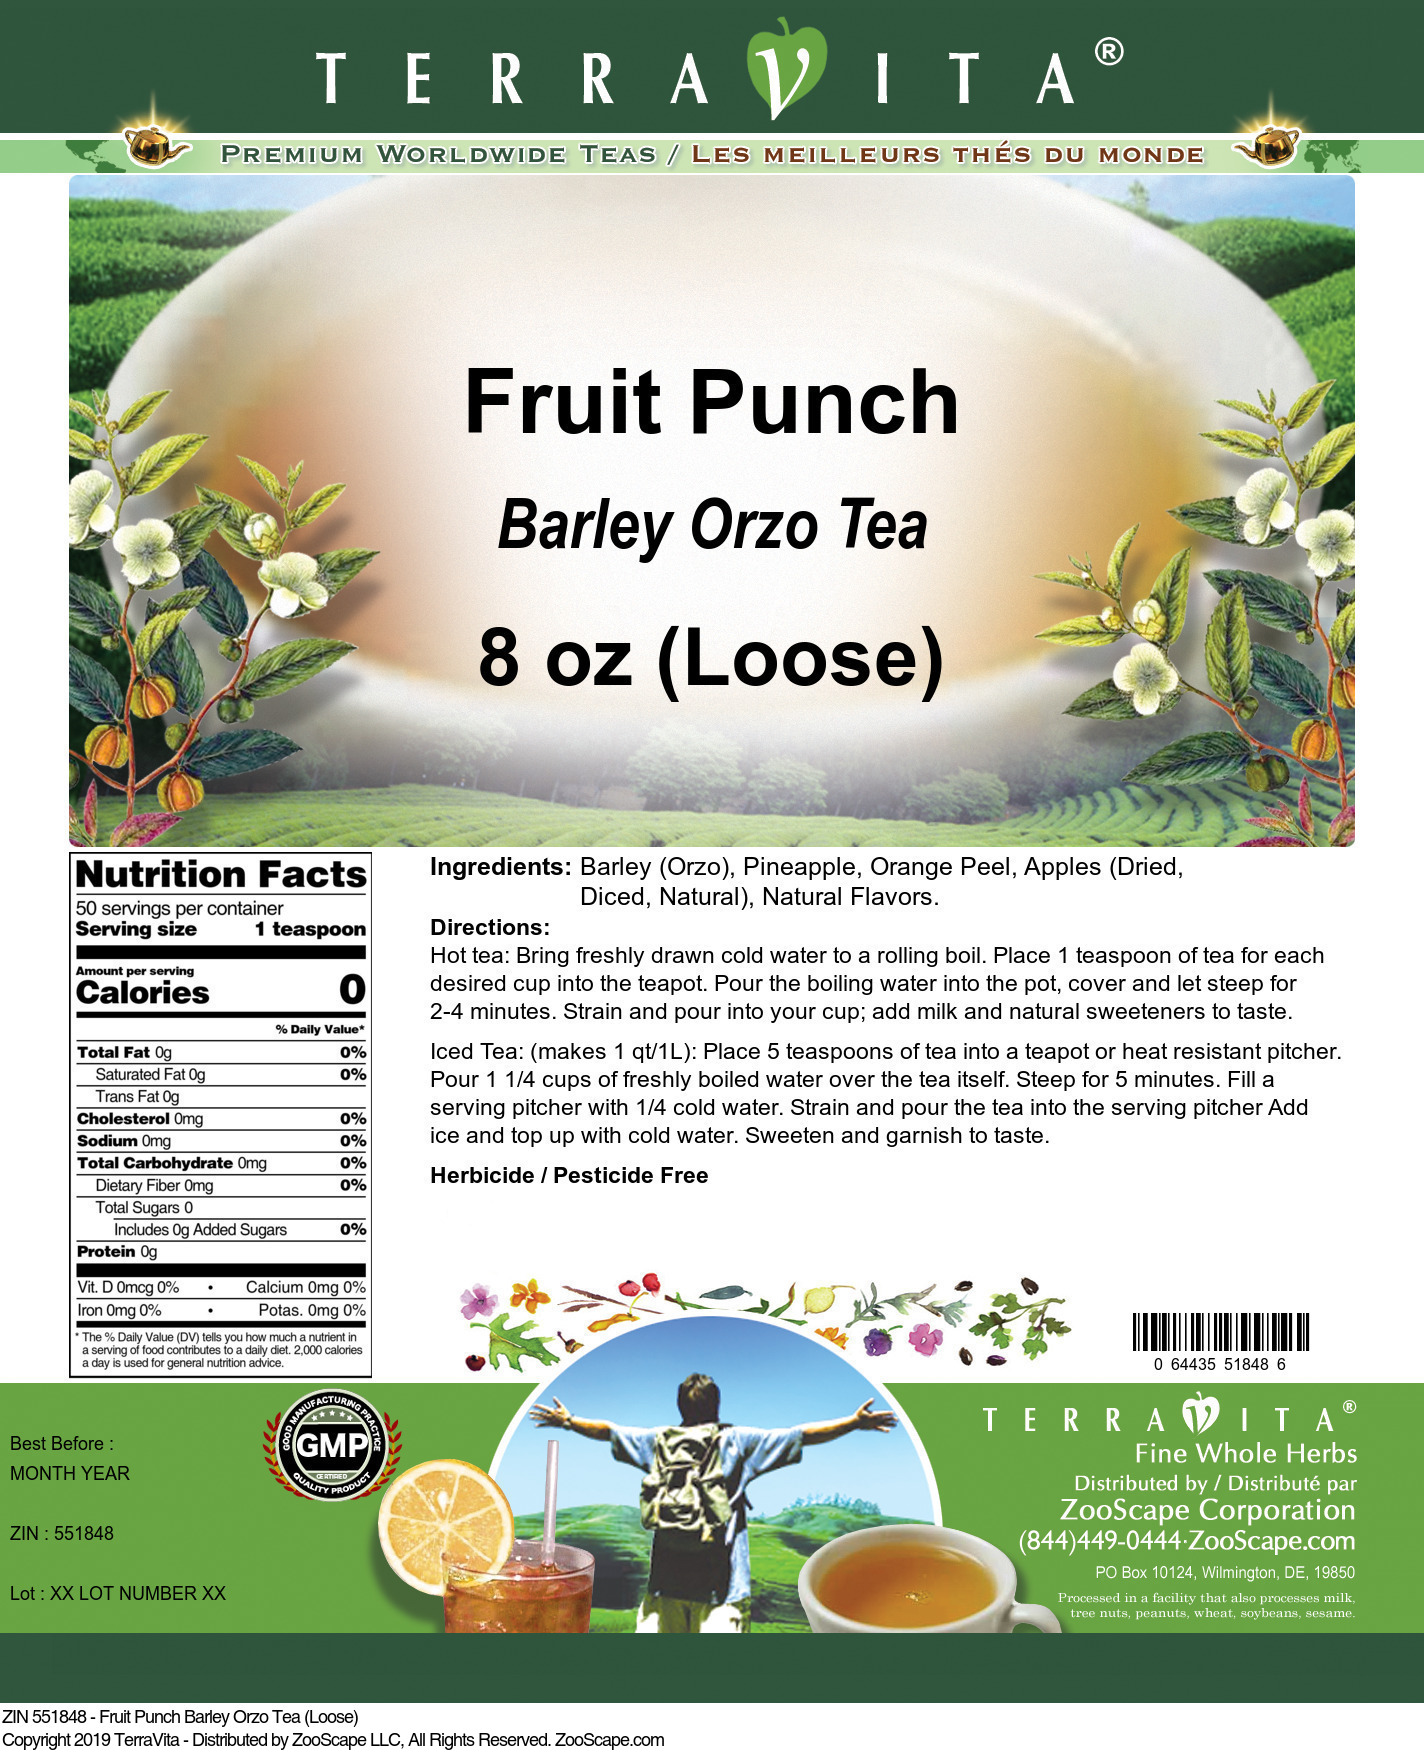 Fruit Punch Barley Orzo Tea (Loose) - Label